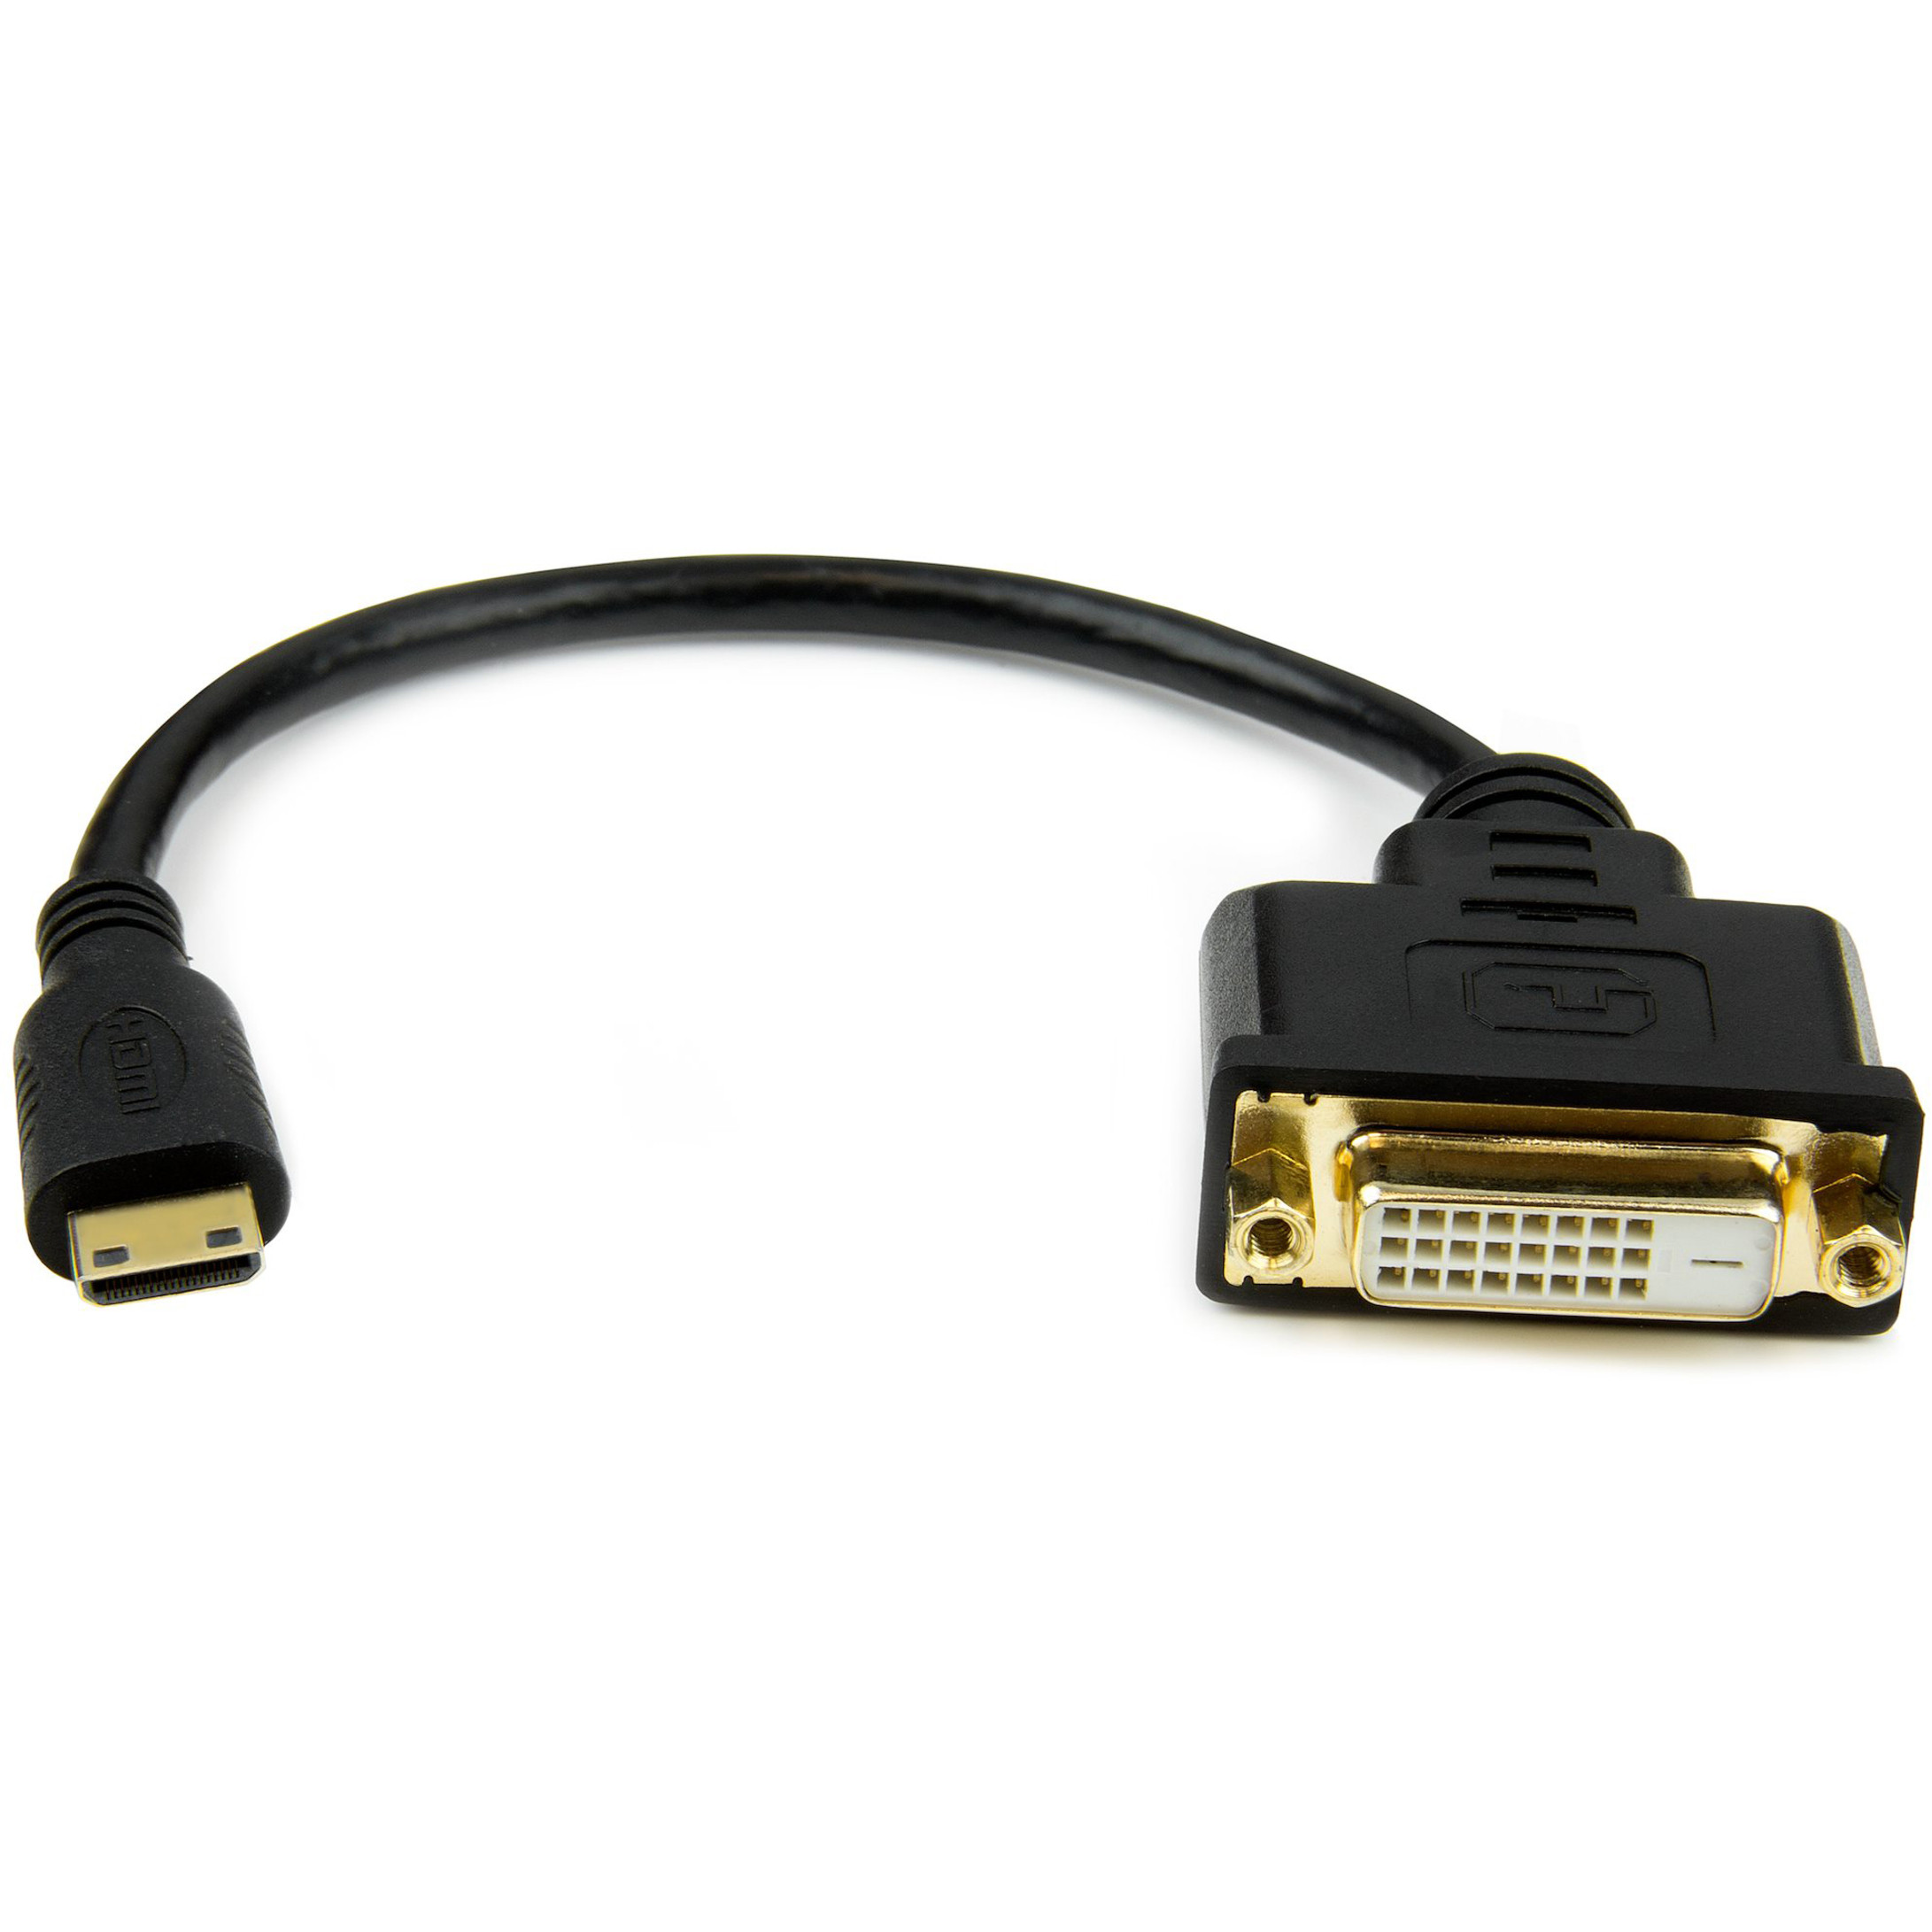 Startech .com 8 in (20cm) Mini HDMI to DVI Cable, DVI-D to Cable (1920x1200p), HDMI Mini Male to DVI-D Female Display Cable Adapter8i... HDCDVIMF8IN - Corporate Armor